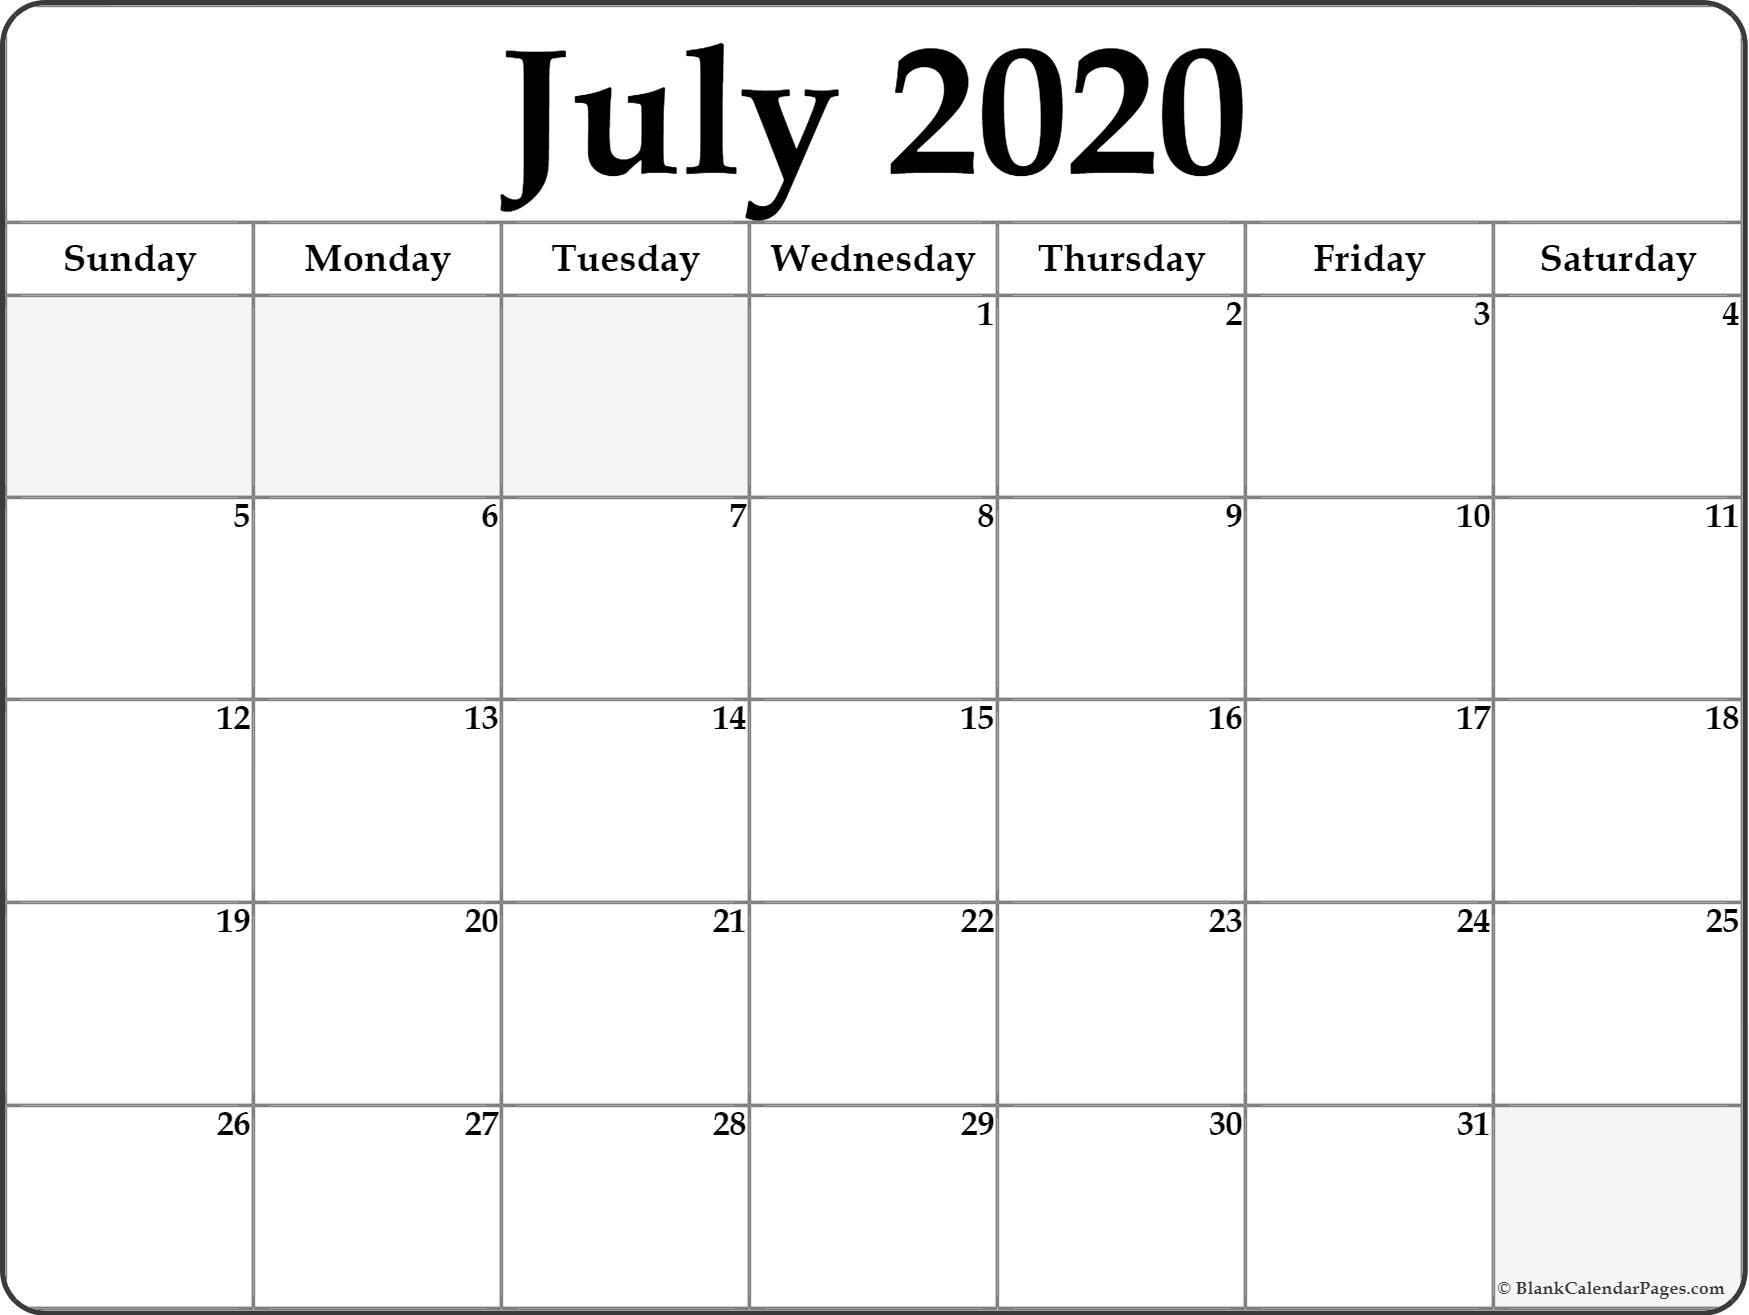 July 2020 calendar